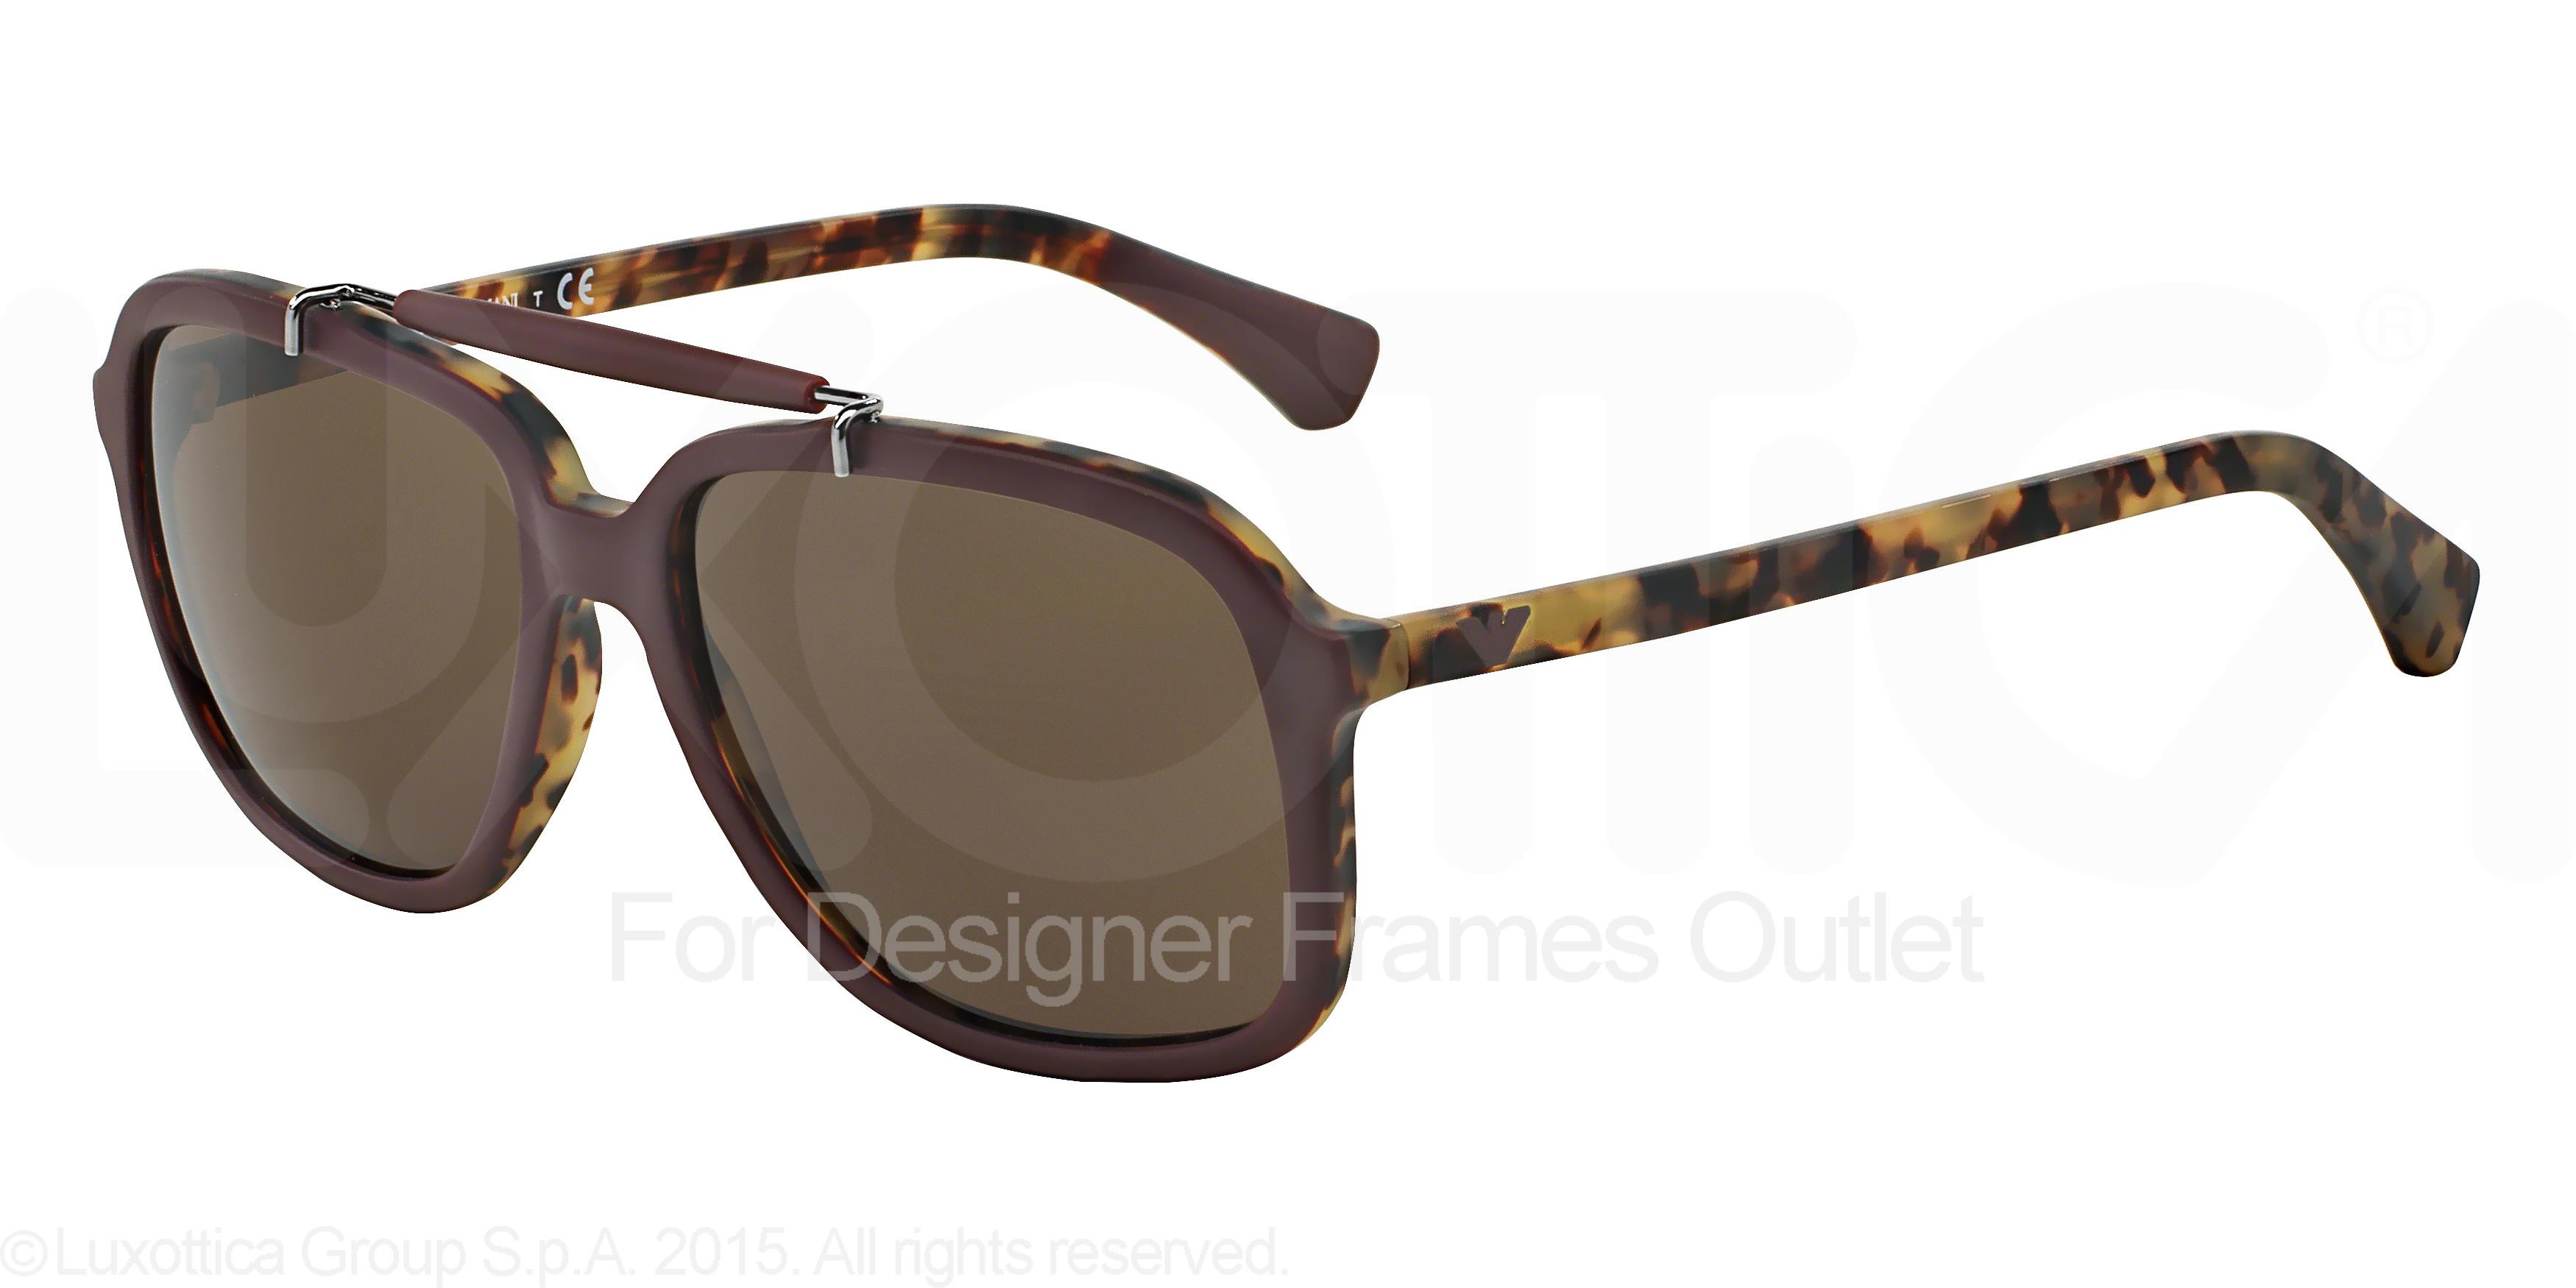 Designer Frames Outlet. Emporio Armani Sunglasses EA4036